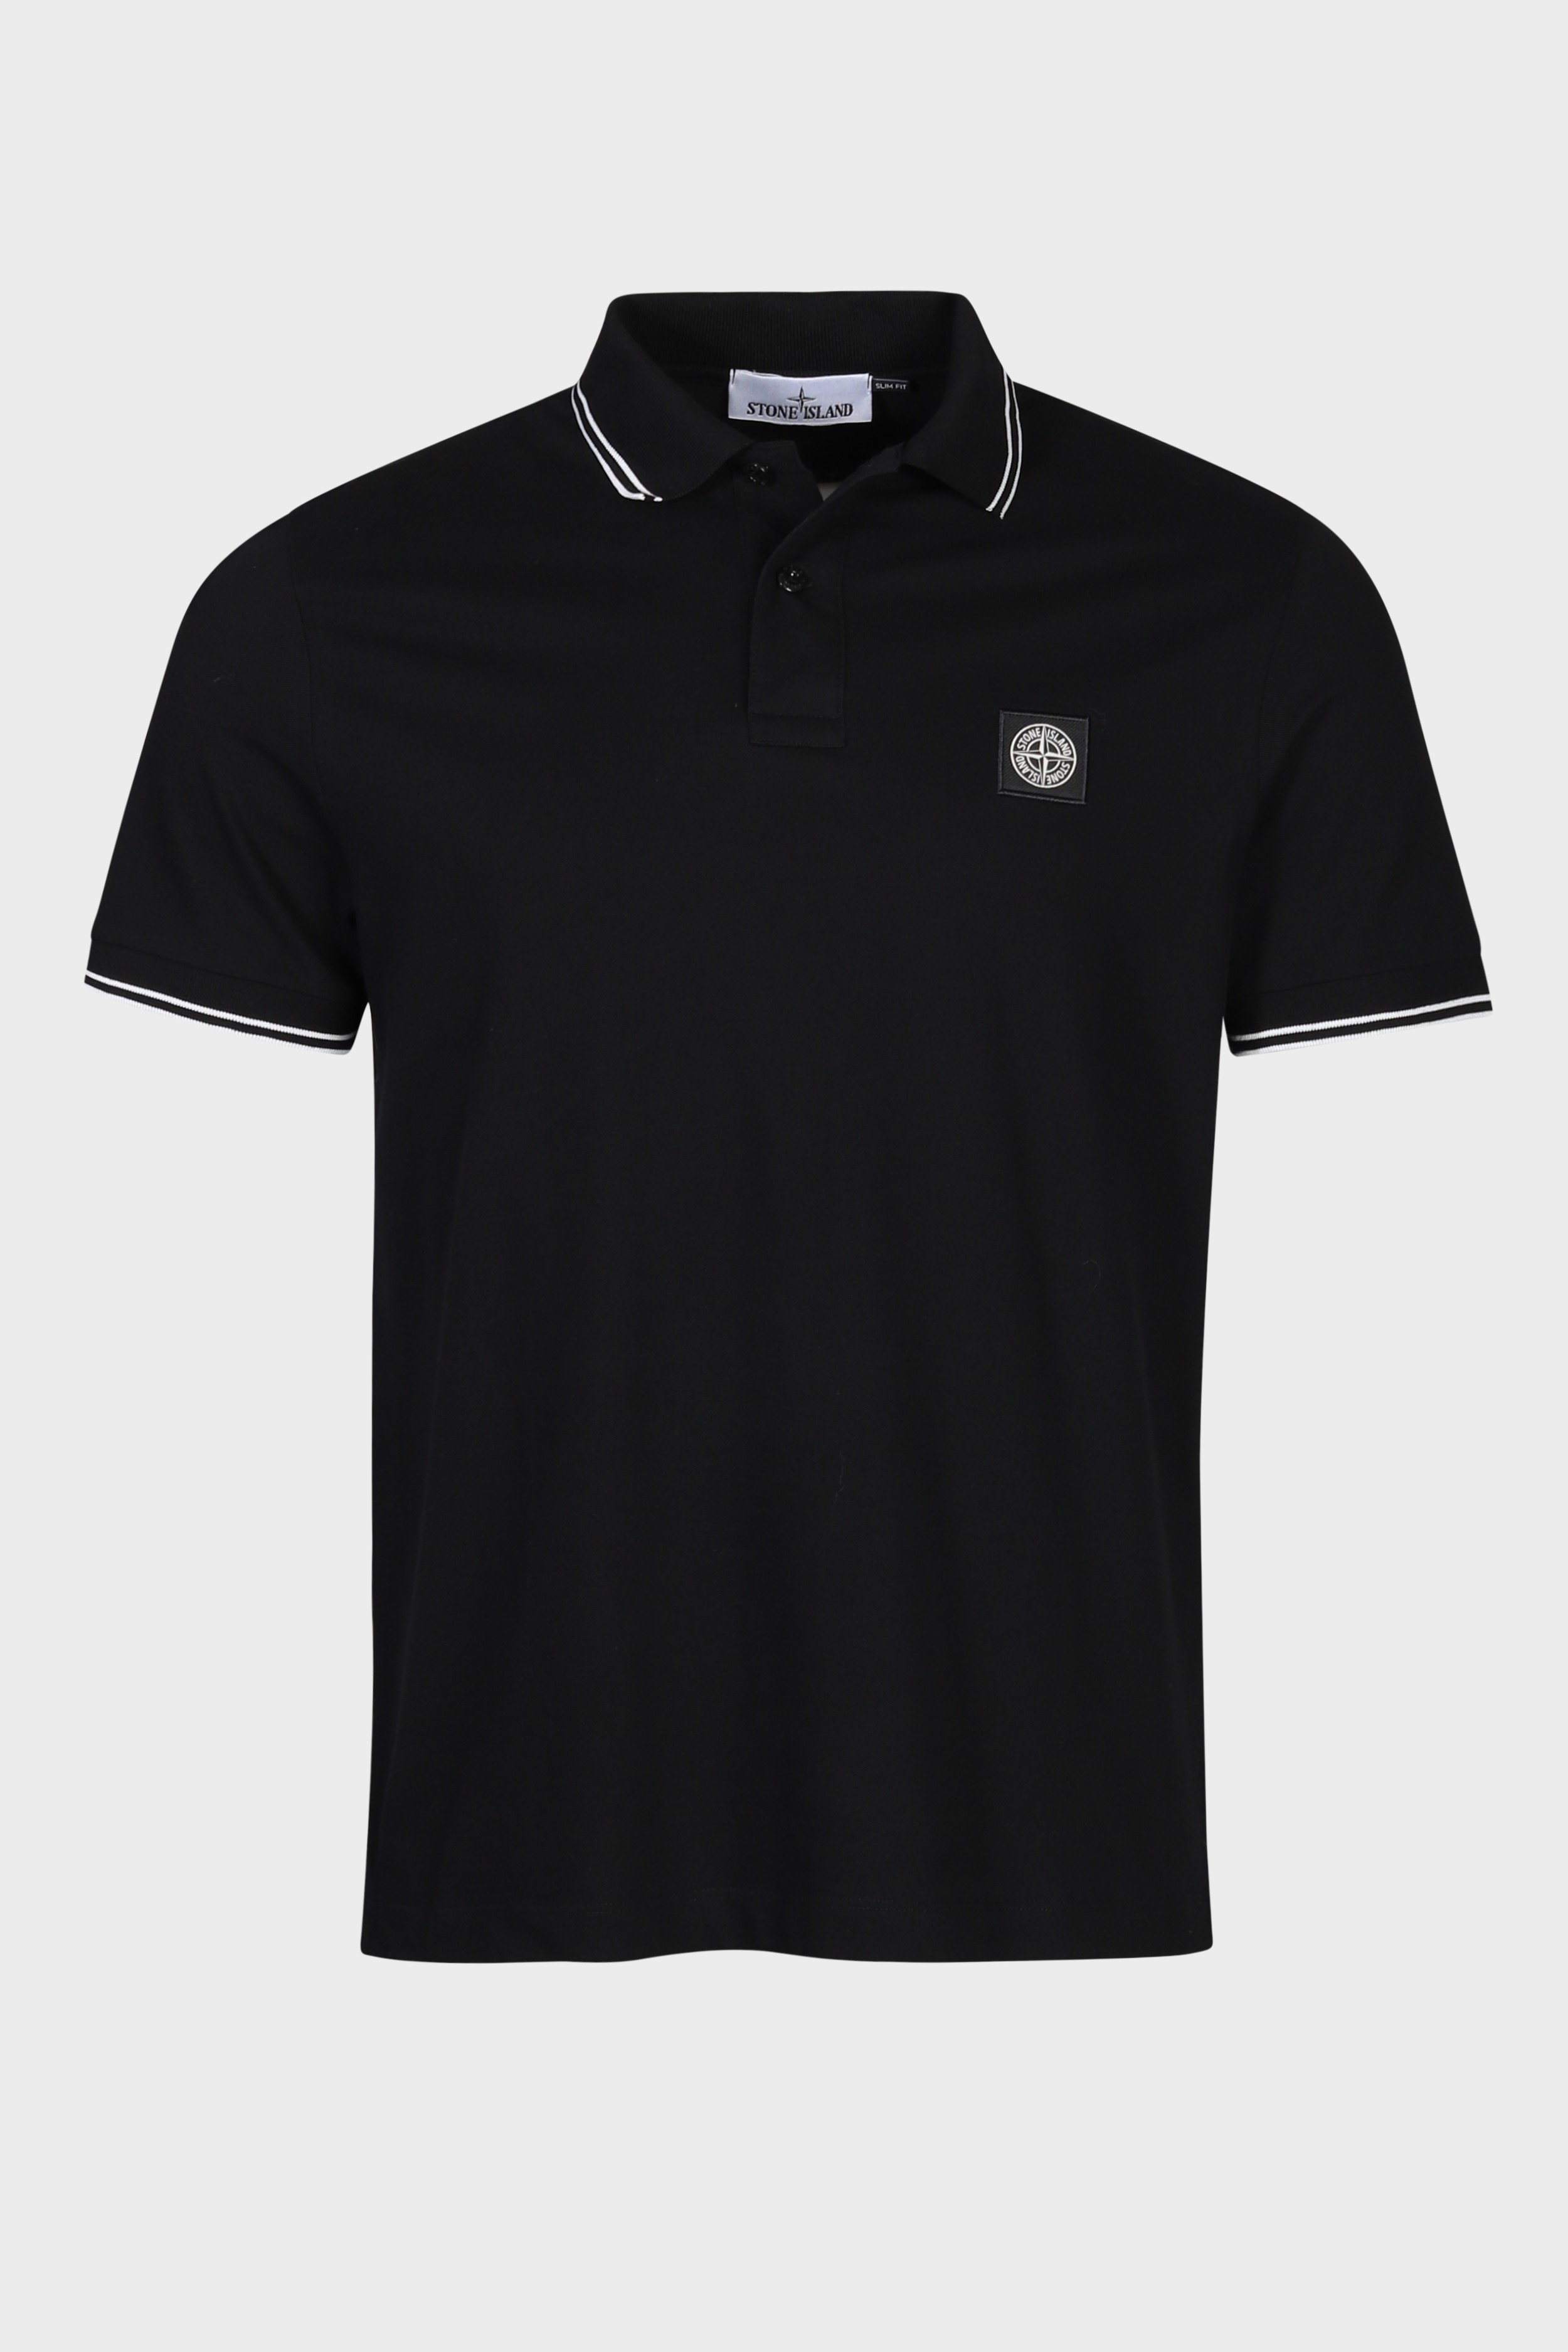 STONE ISLAND Slim Fit Polo Shirt in Black L